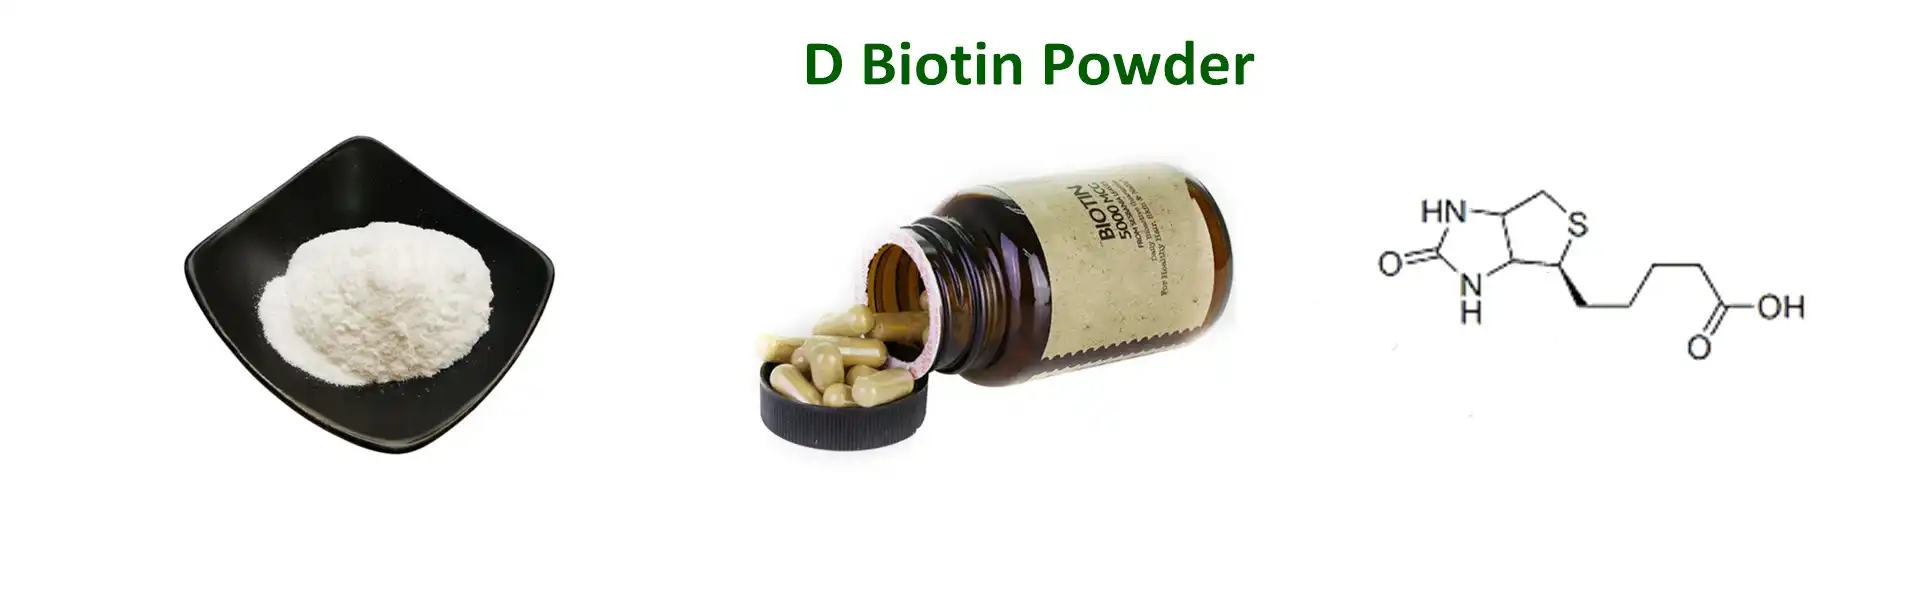 D-BIOTIN Powder